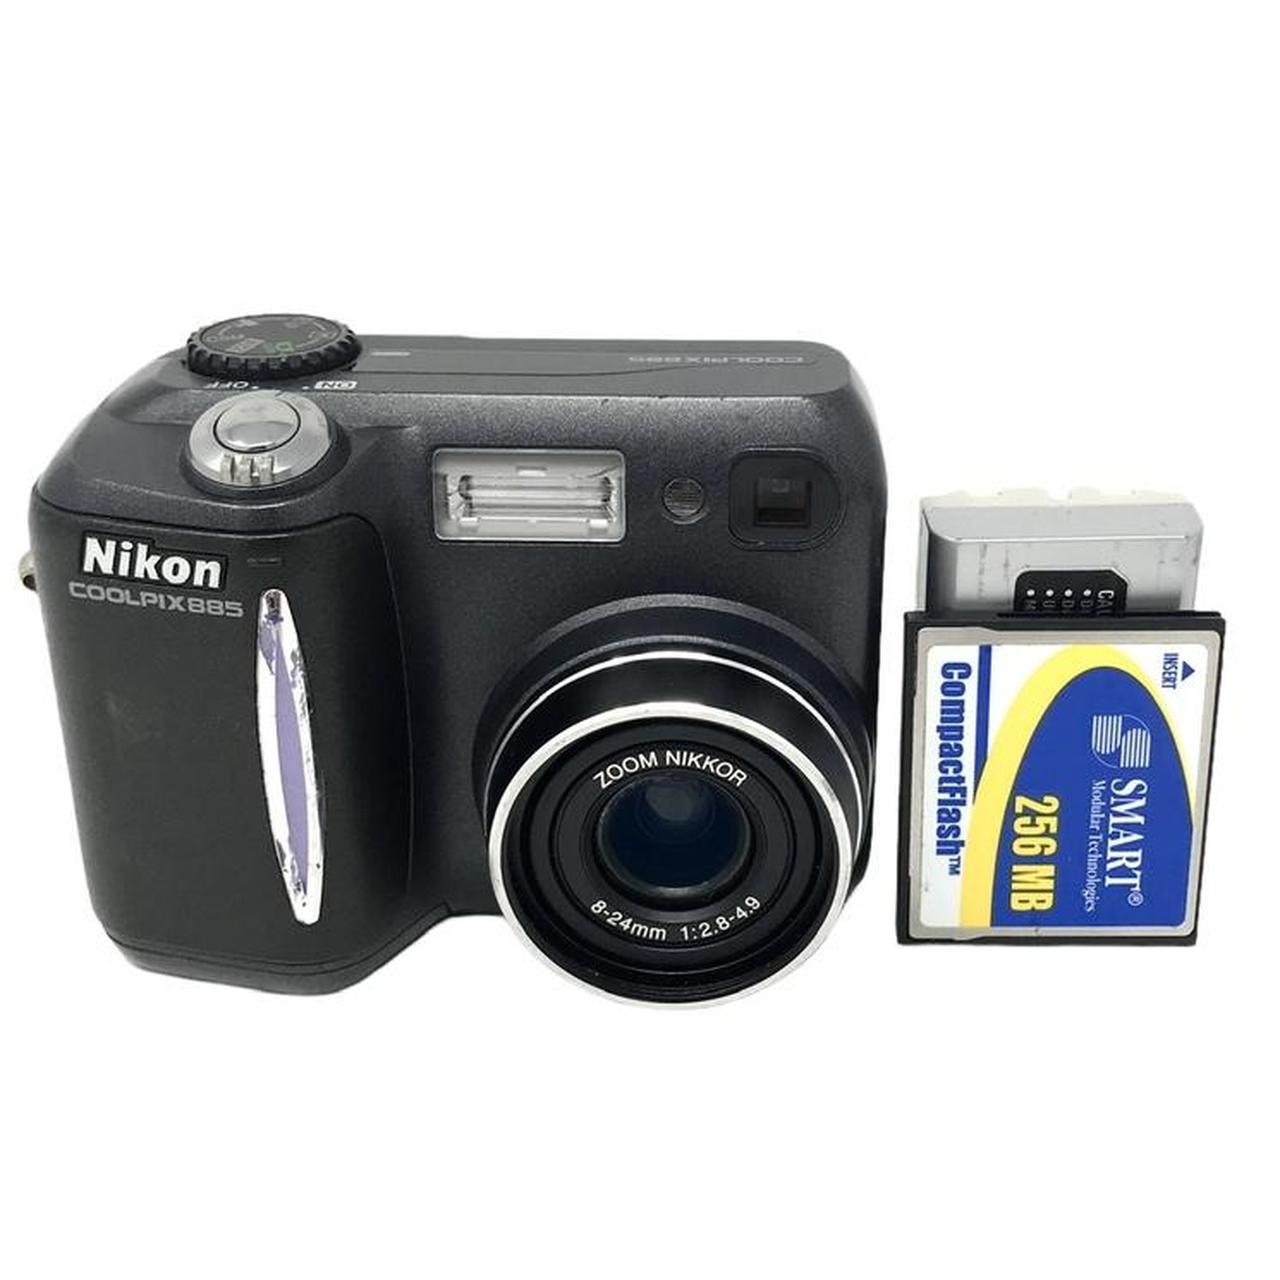 Product Image 1 - Nikon Coolpix 885 Digital Camera